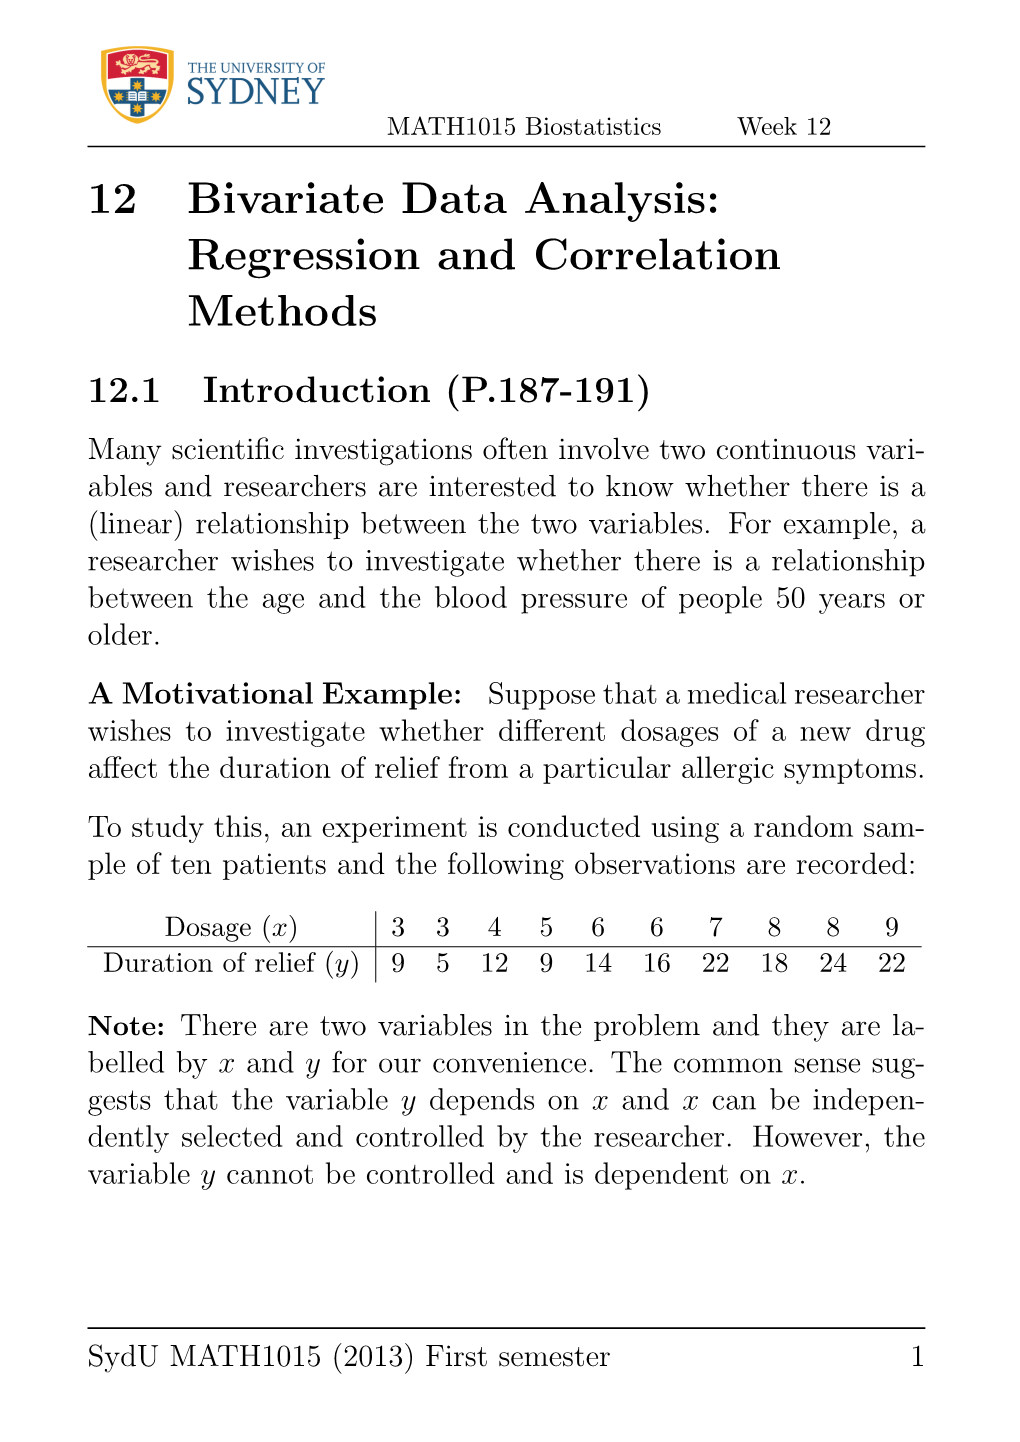 12 Bivariate Data Analysis: Regression and Correlation Methods